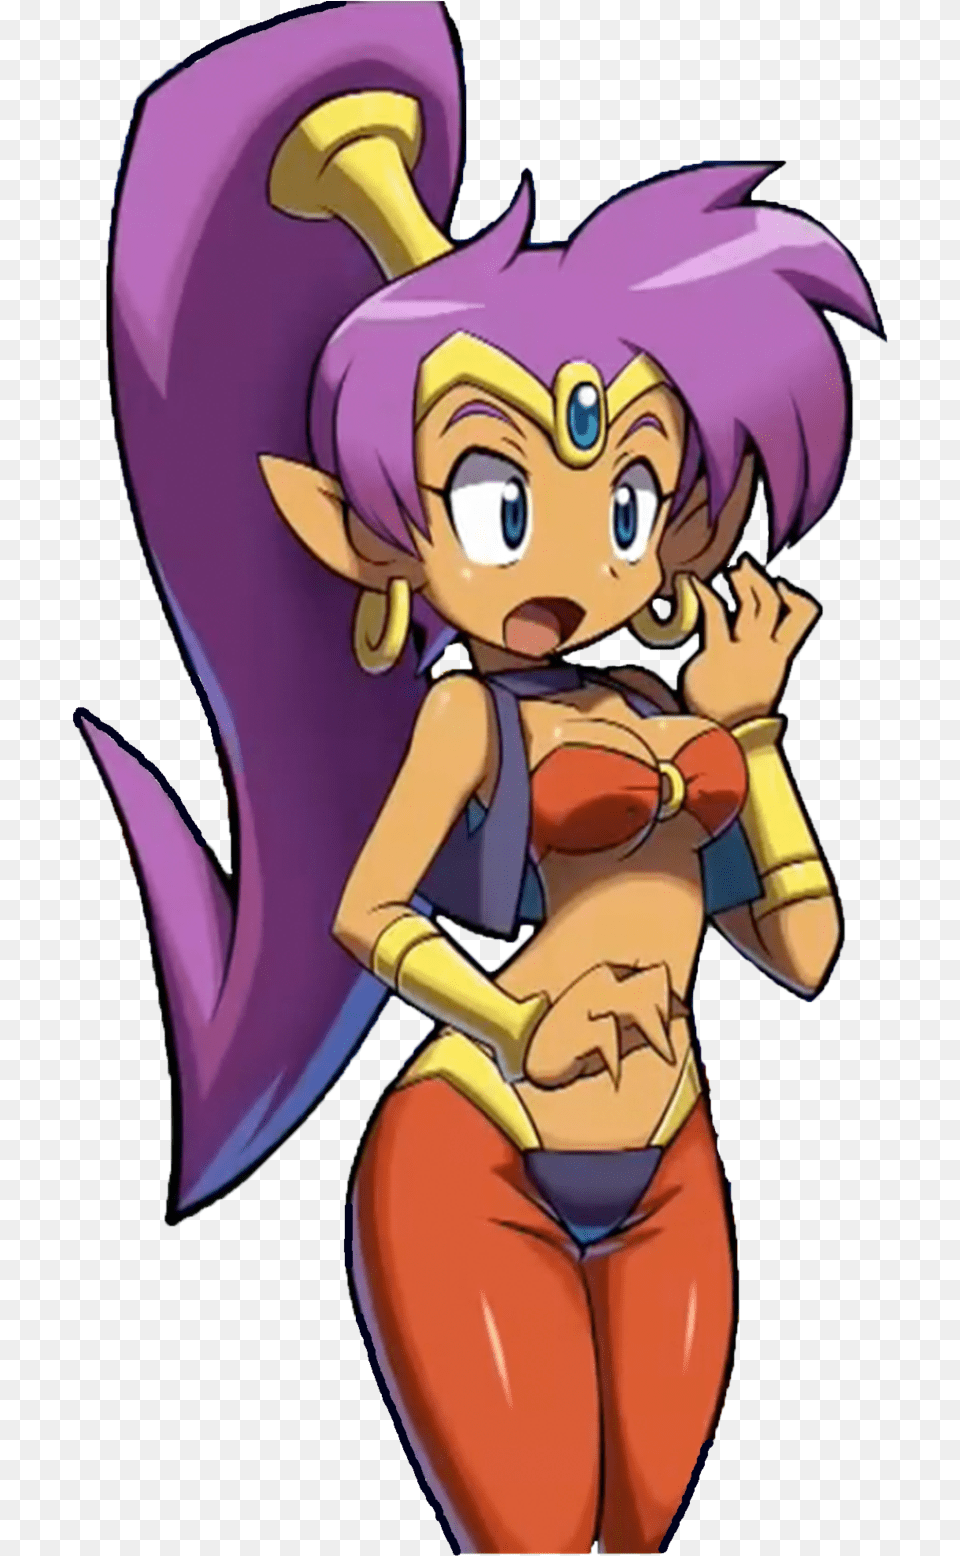 Result For Shantae Shantae Pirates Curse Art, Book, Comics, Publication, Baby Png Image